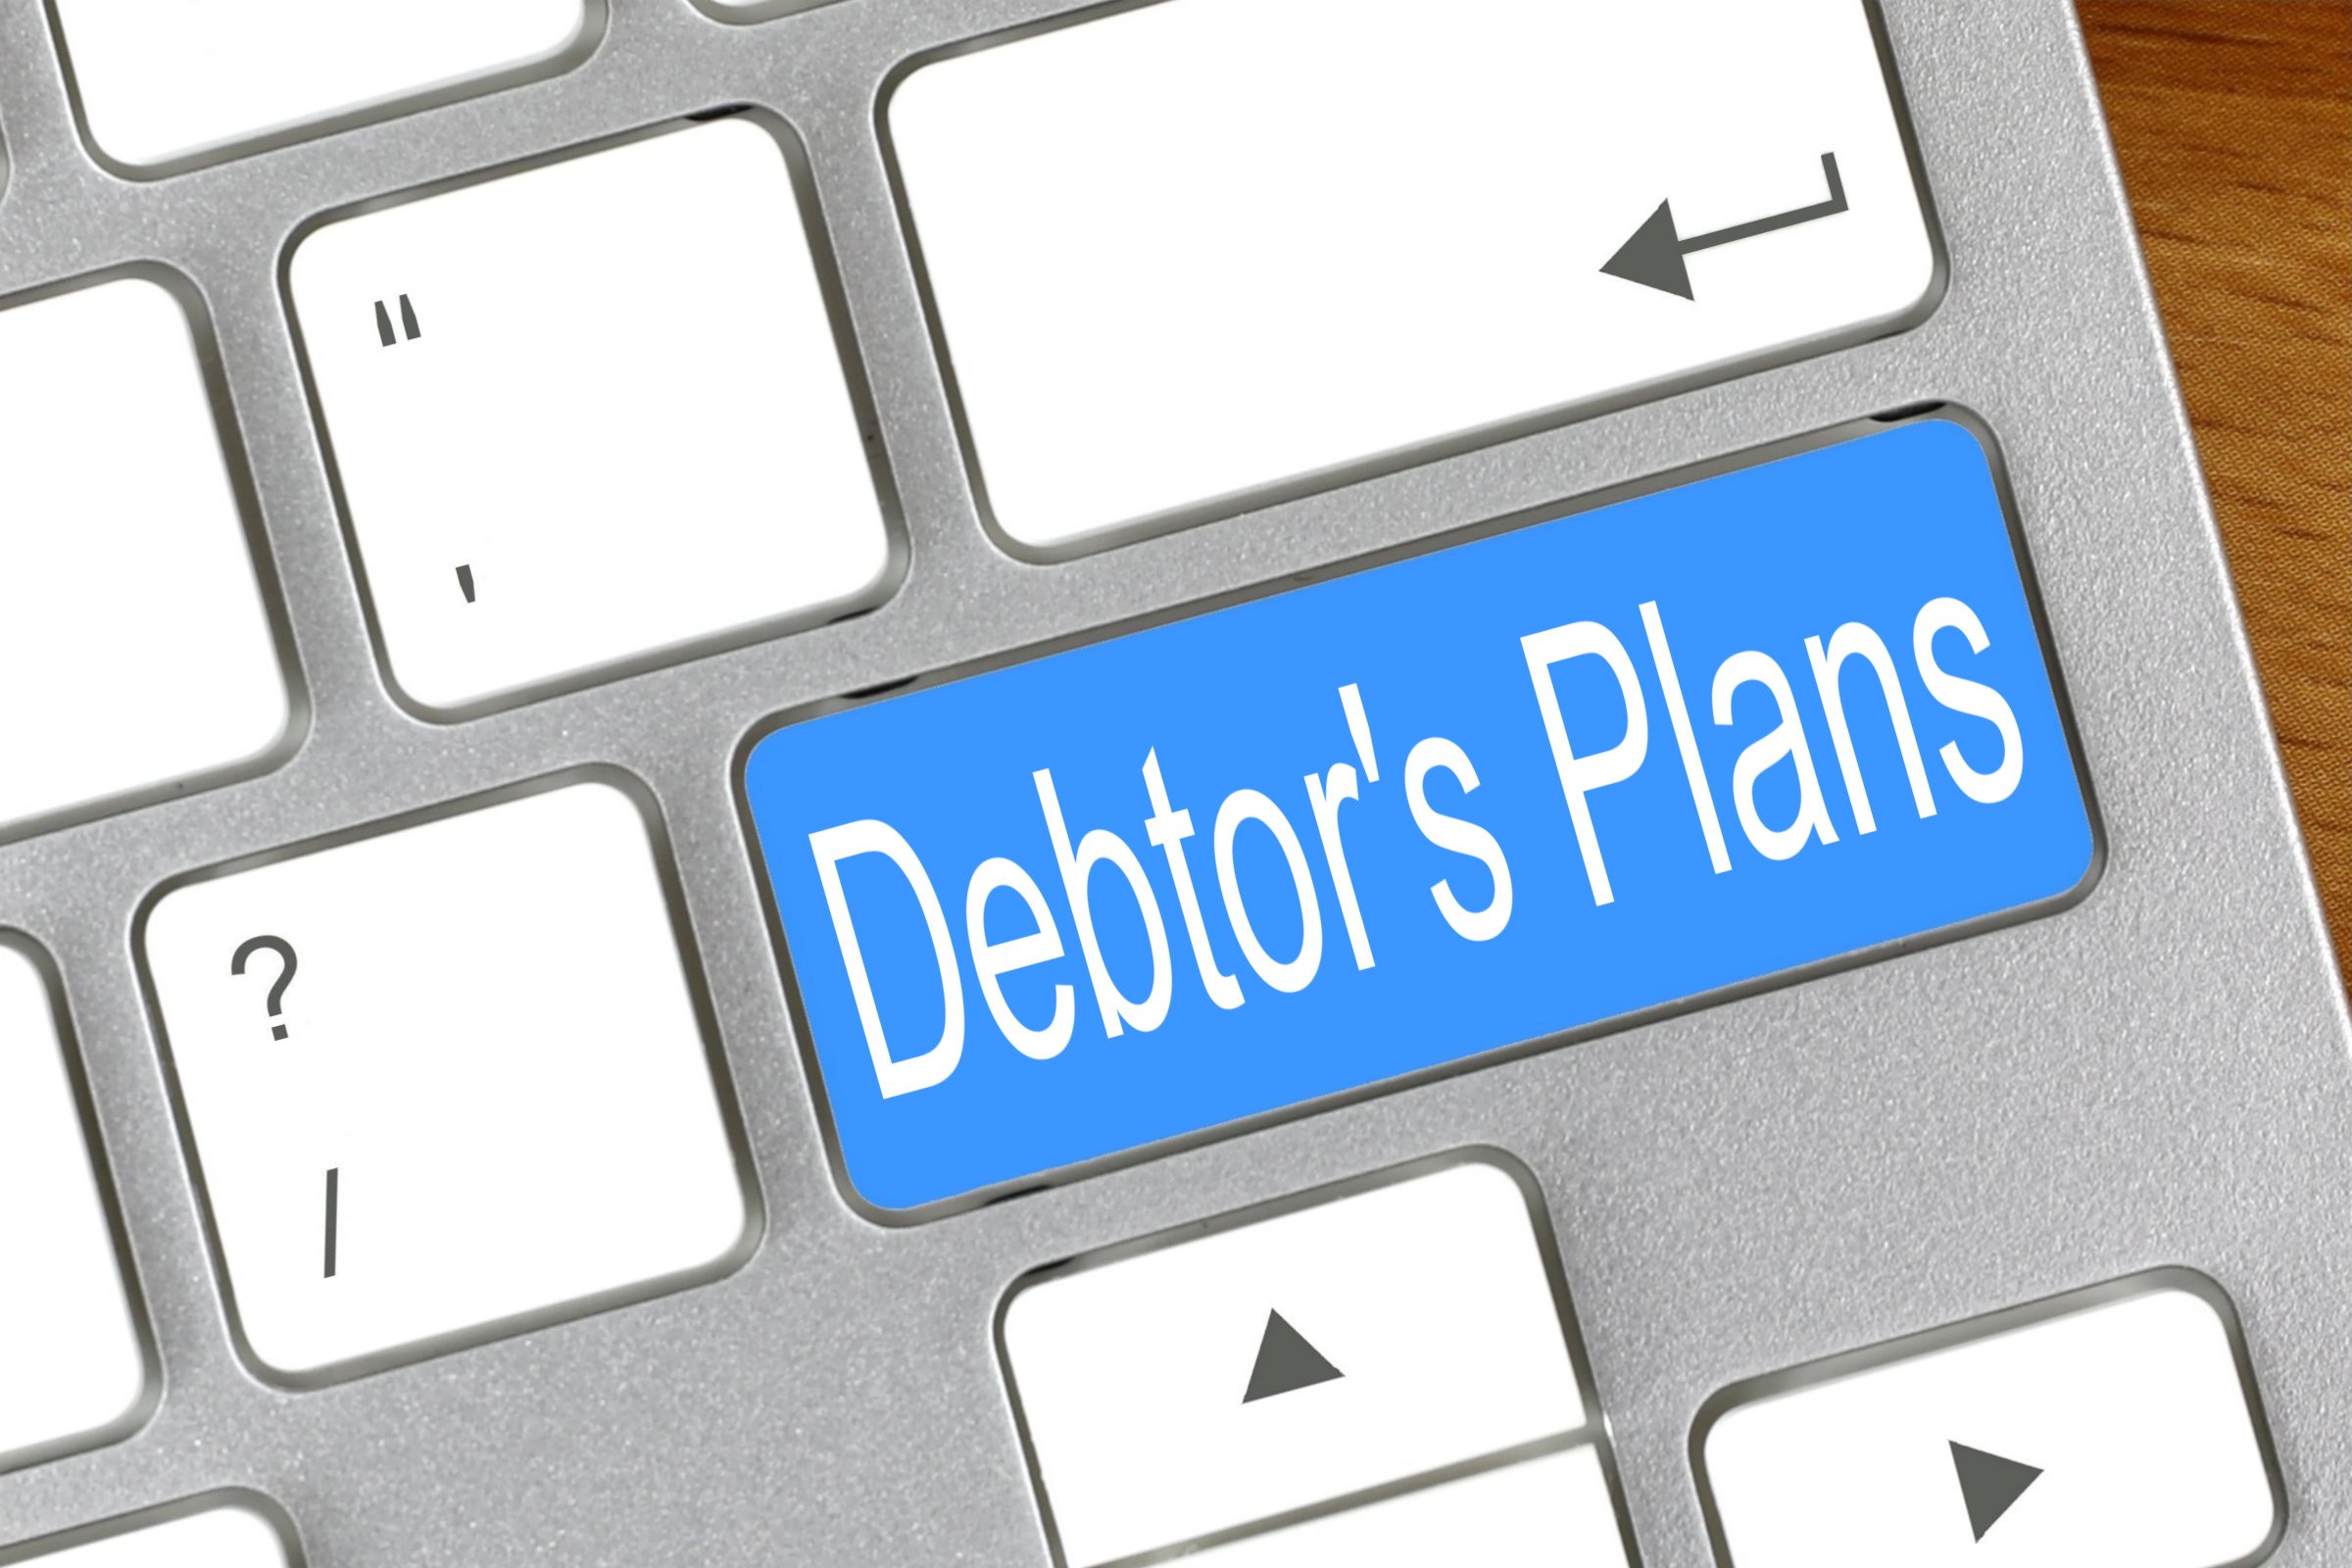 debtors plans